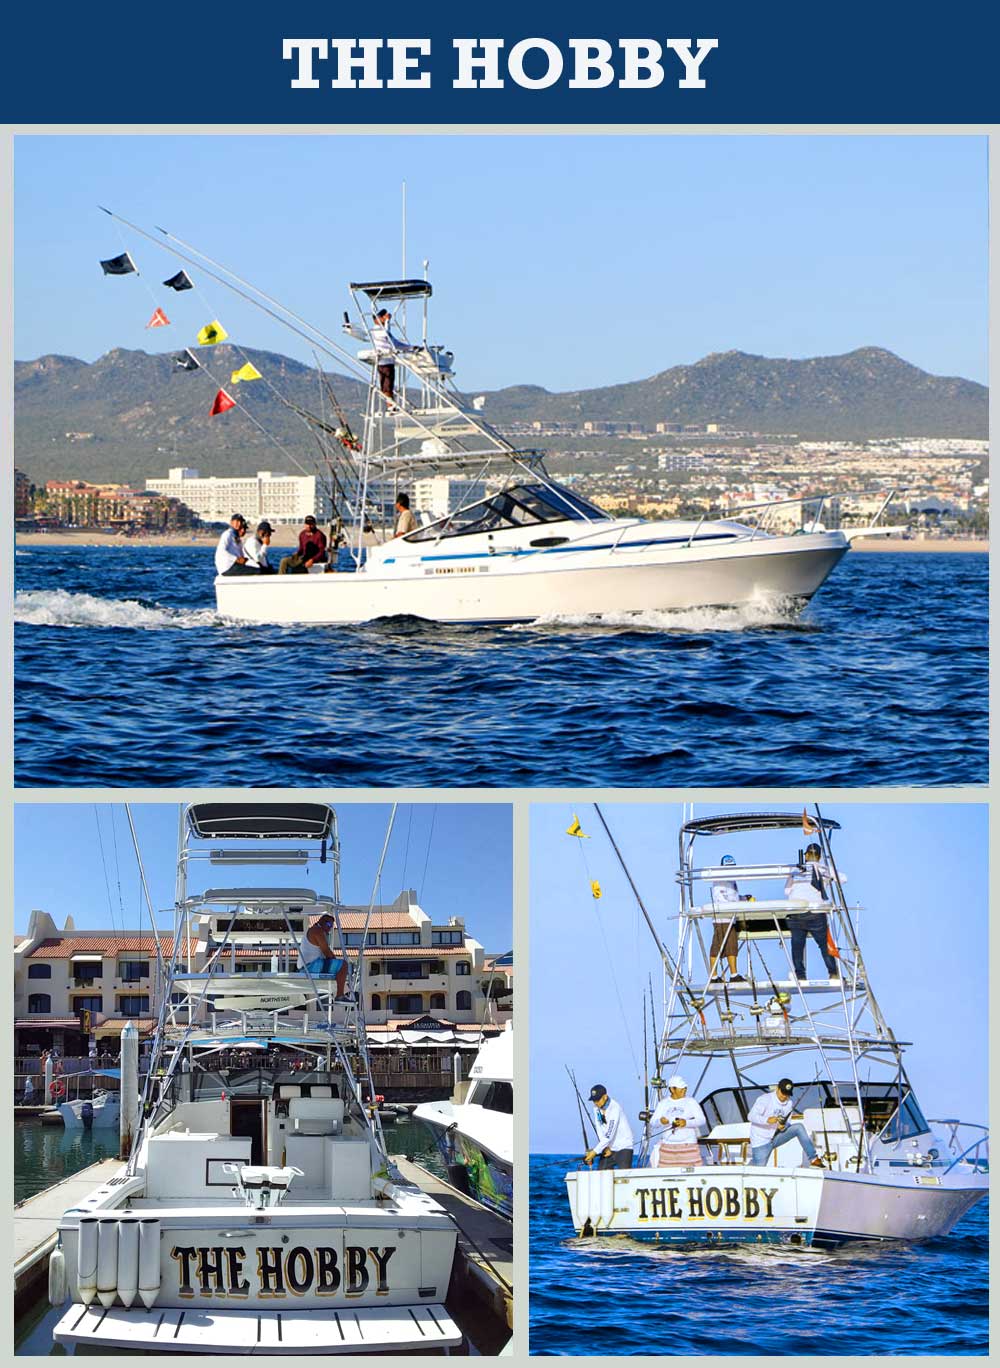 Cabo charter fishing boat, The Hobby, Pochos